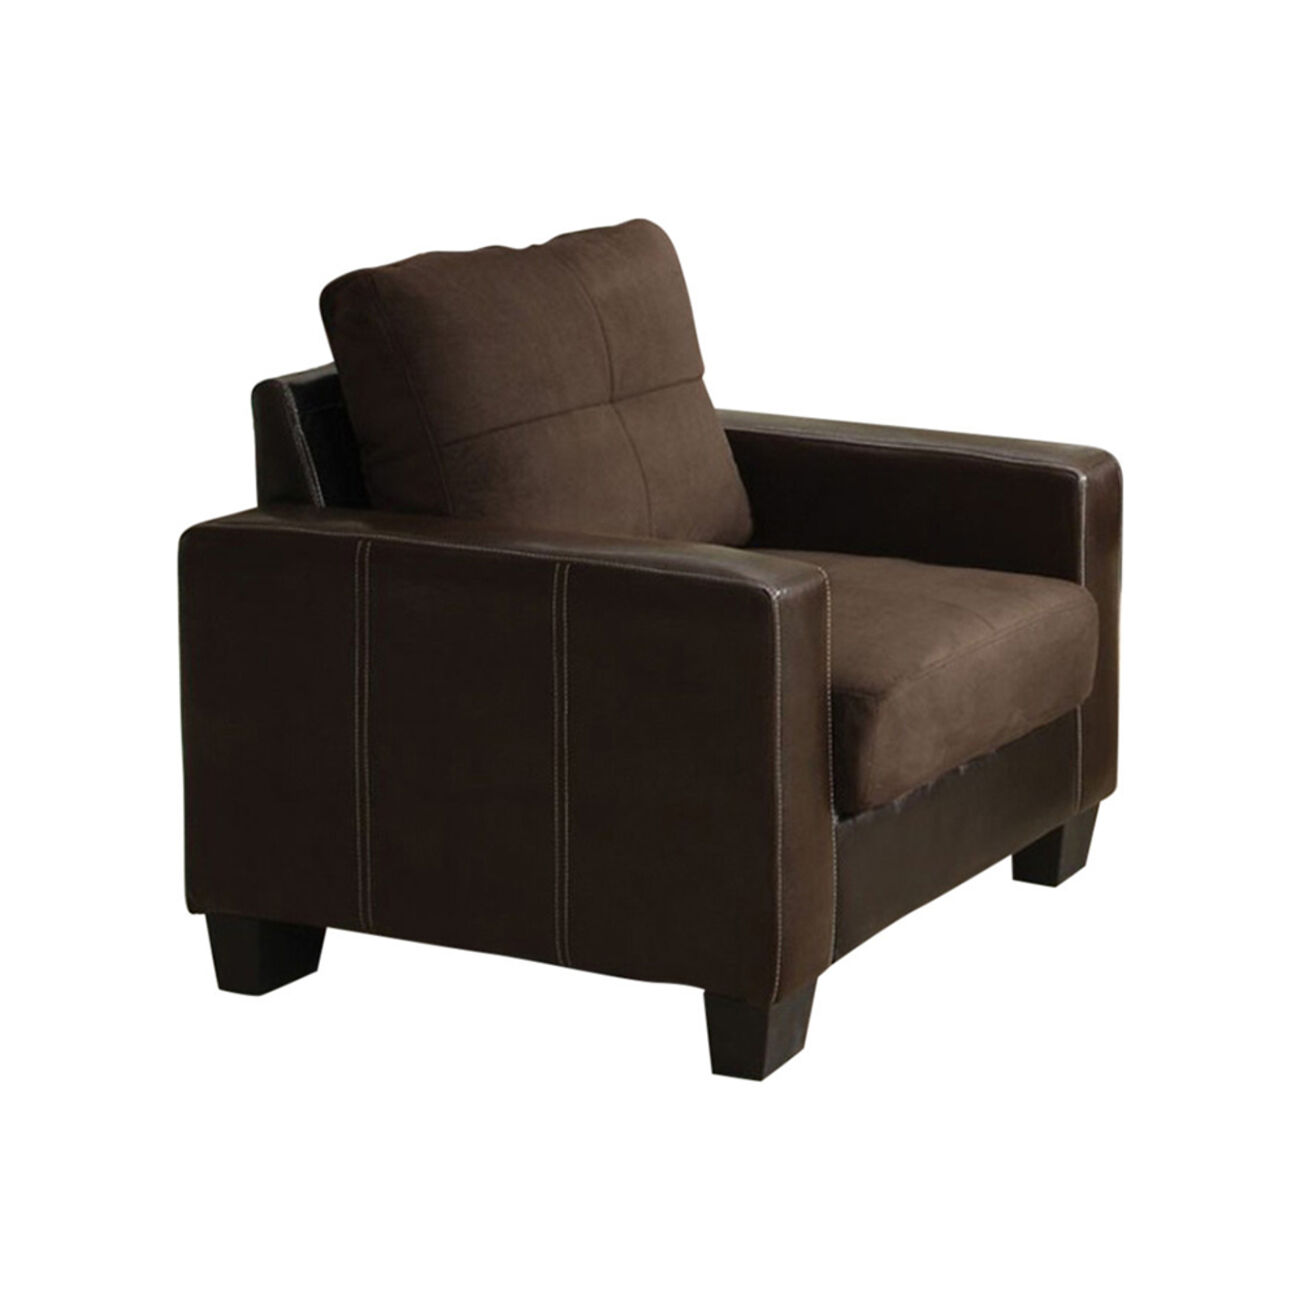 Laverne Contemporary Chair, Chocolate & Espresso Color